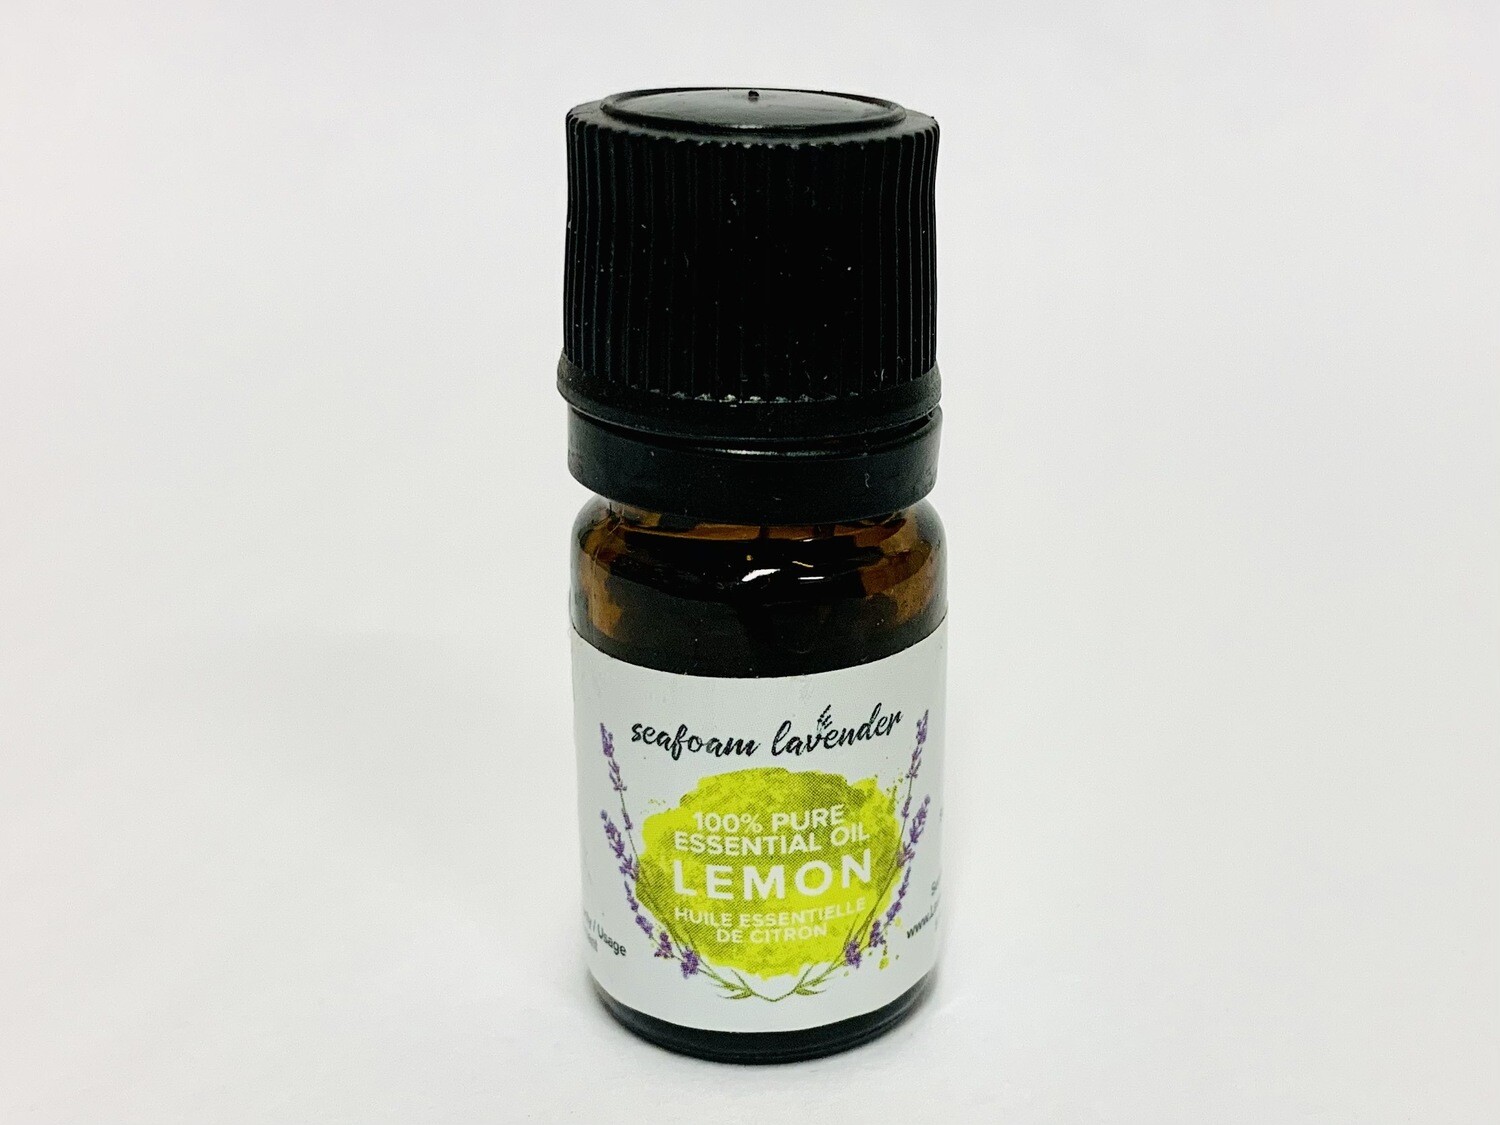 Lemon, Seafoam Lavender Essential Oil